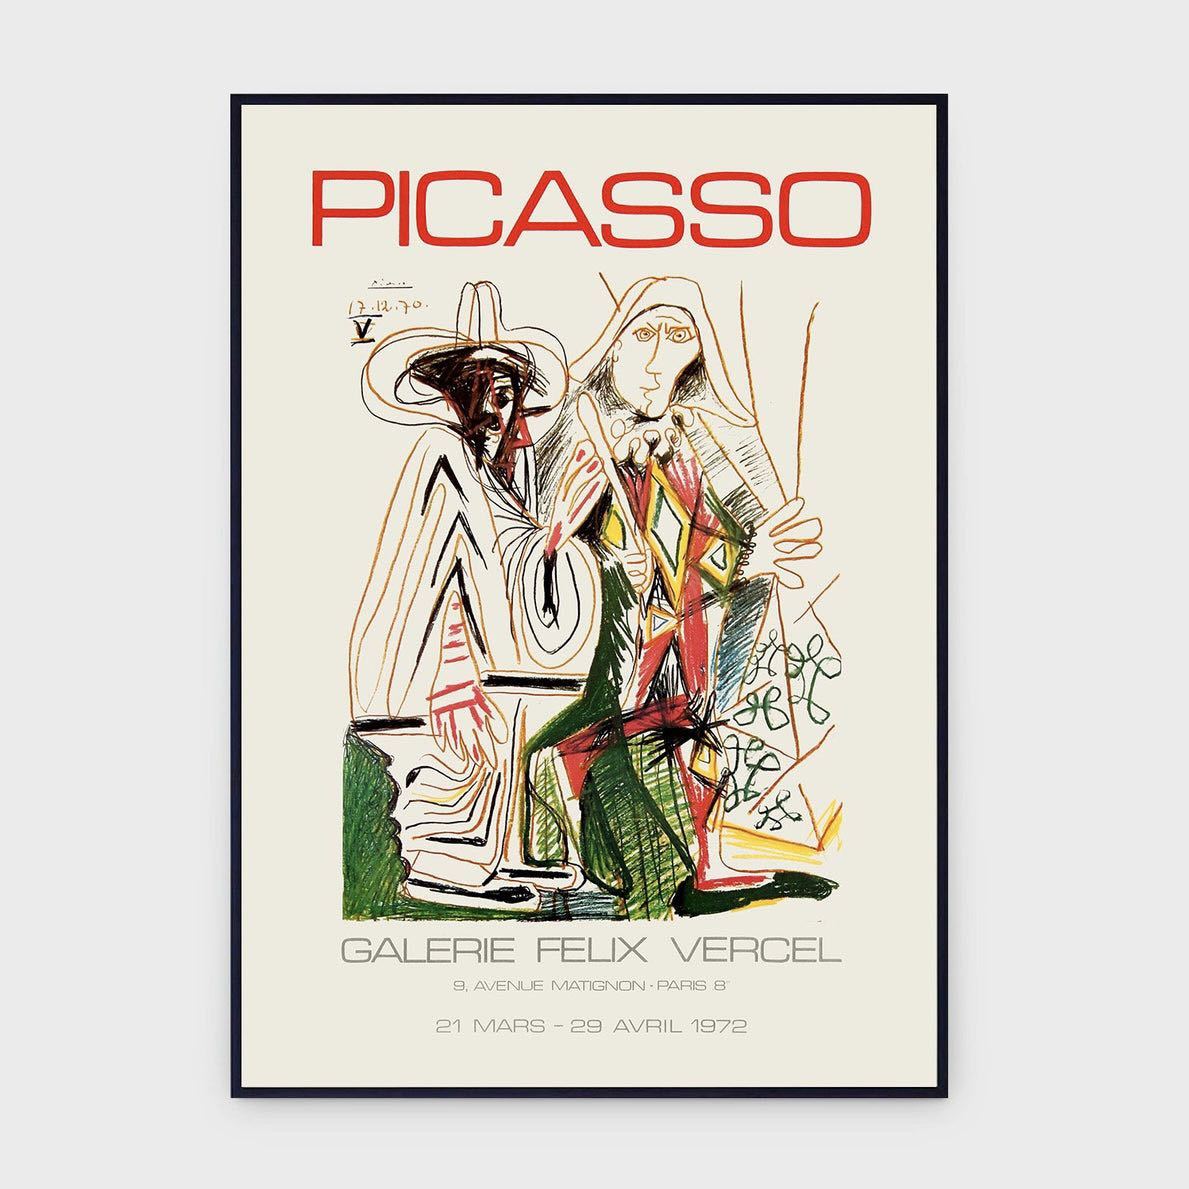 Pablo Picasso Galerie Felix Vercel Paris 1972 ピカソ 展示会ポスター ビンテージポスター アートポスター モダンアート 海外ポスター_画像1